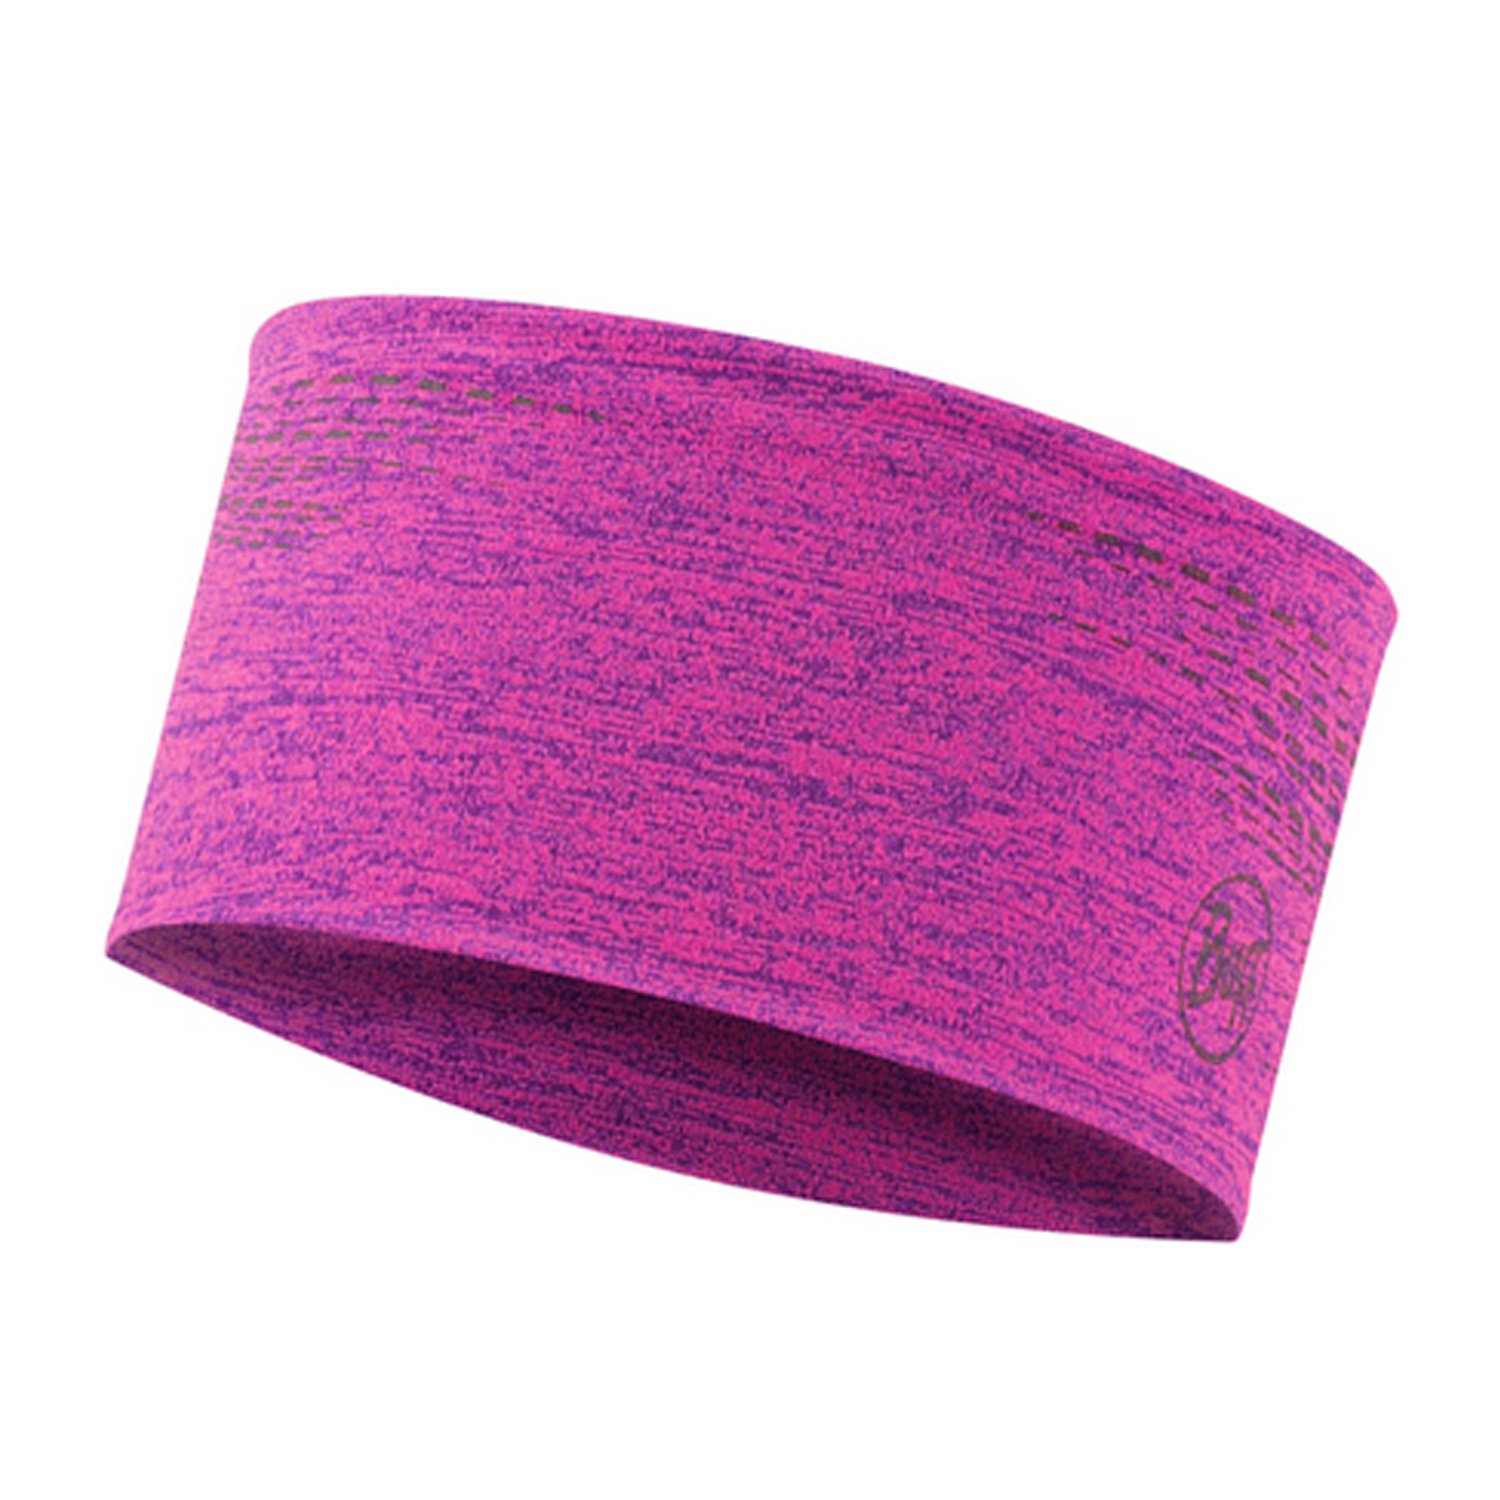 Повязка Buff DryFlx Headband Fluor, розовый, 2022-23, 118098.522.10.00 повязка buff dryflx headband brindle brown us one size 118098 315 10 00